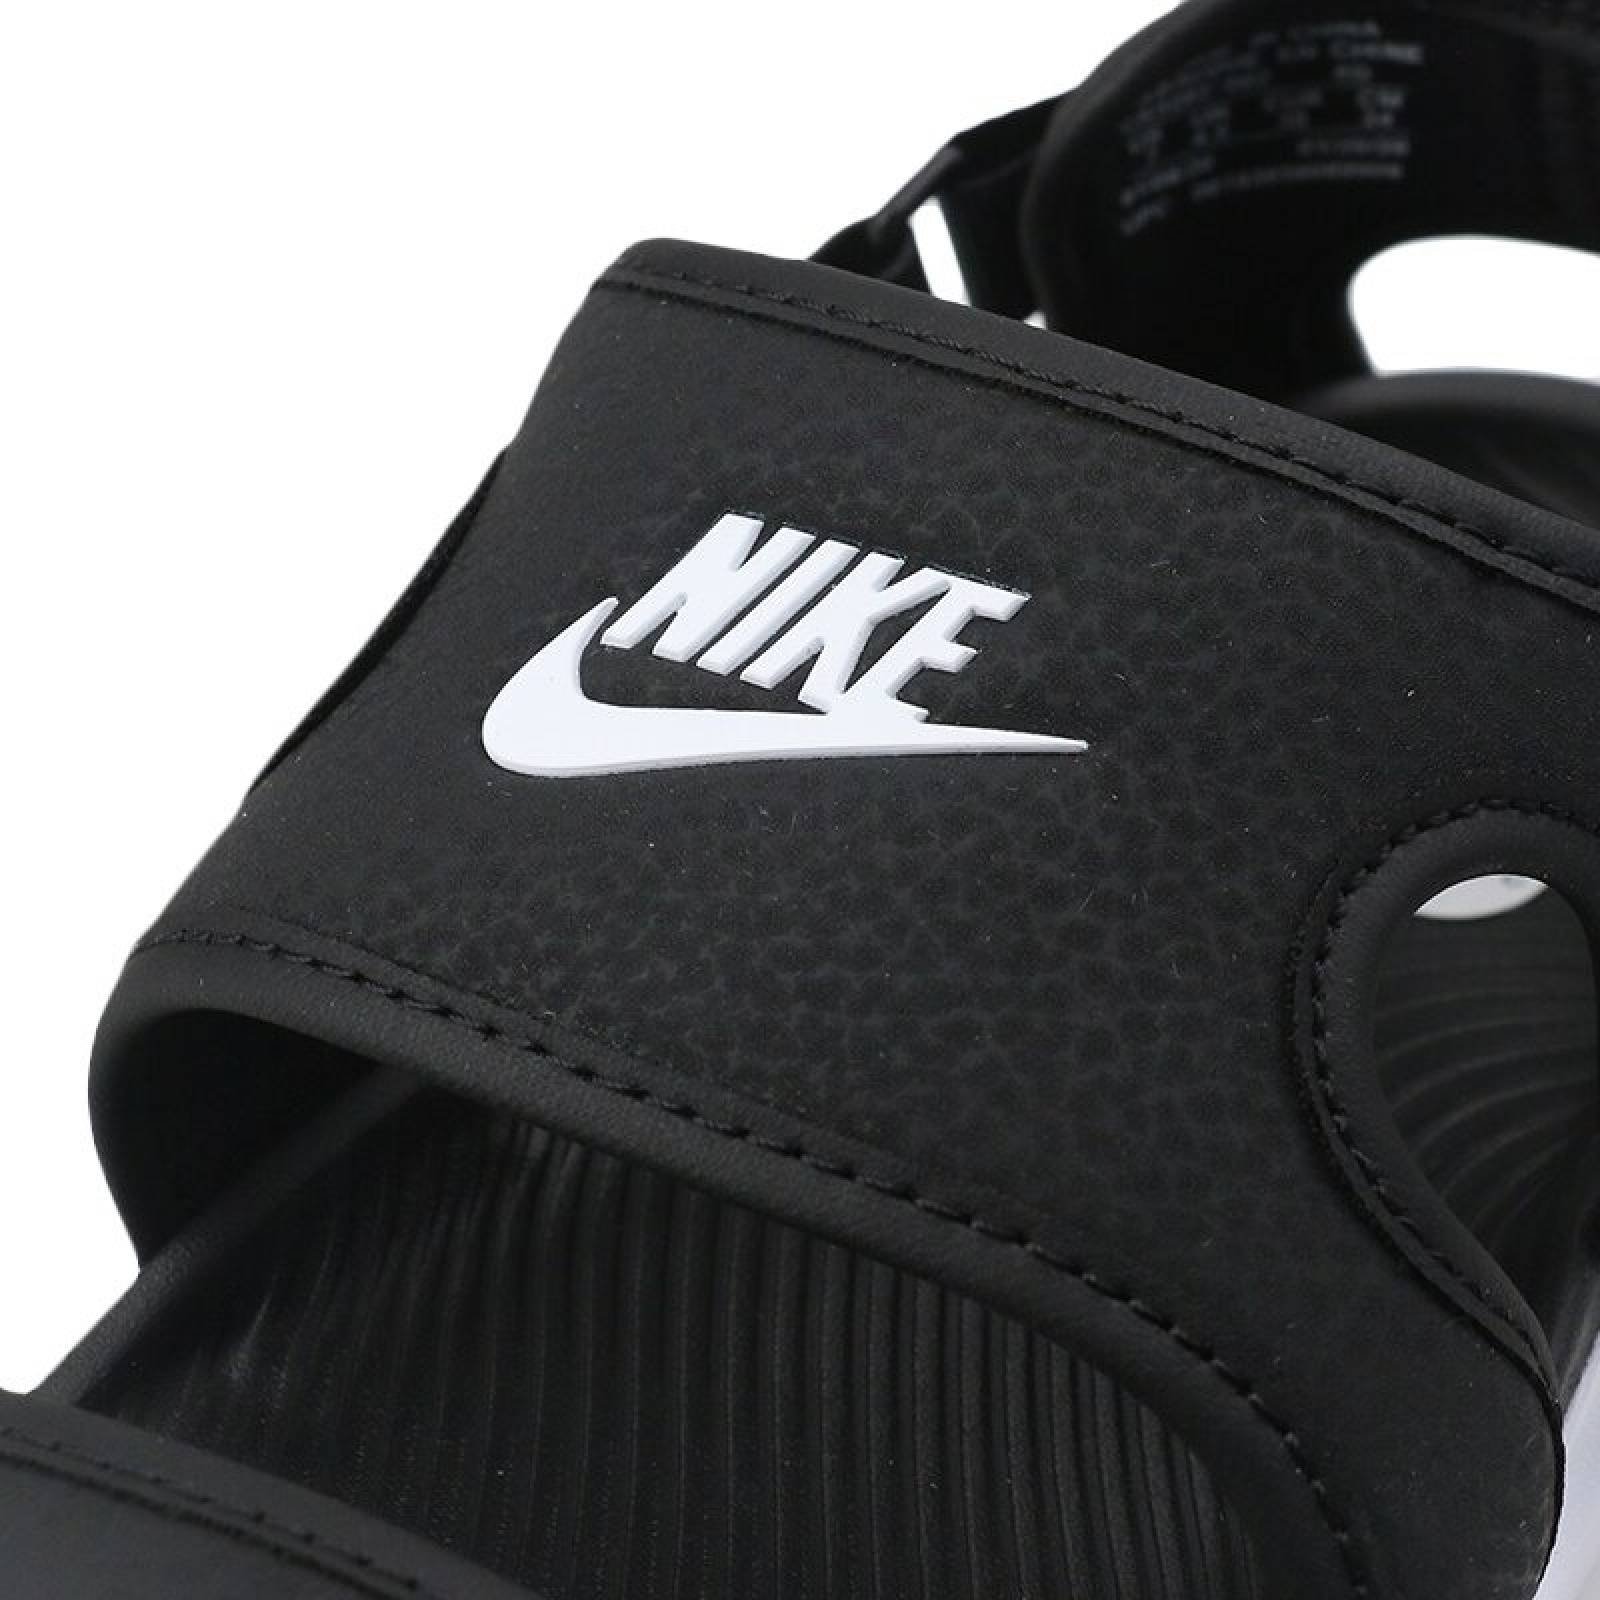 Sandalia Nike Owaysis Original para Mujer CK9283 002